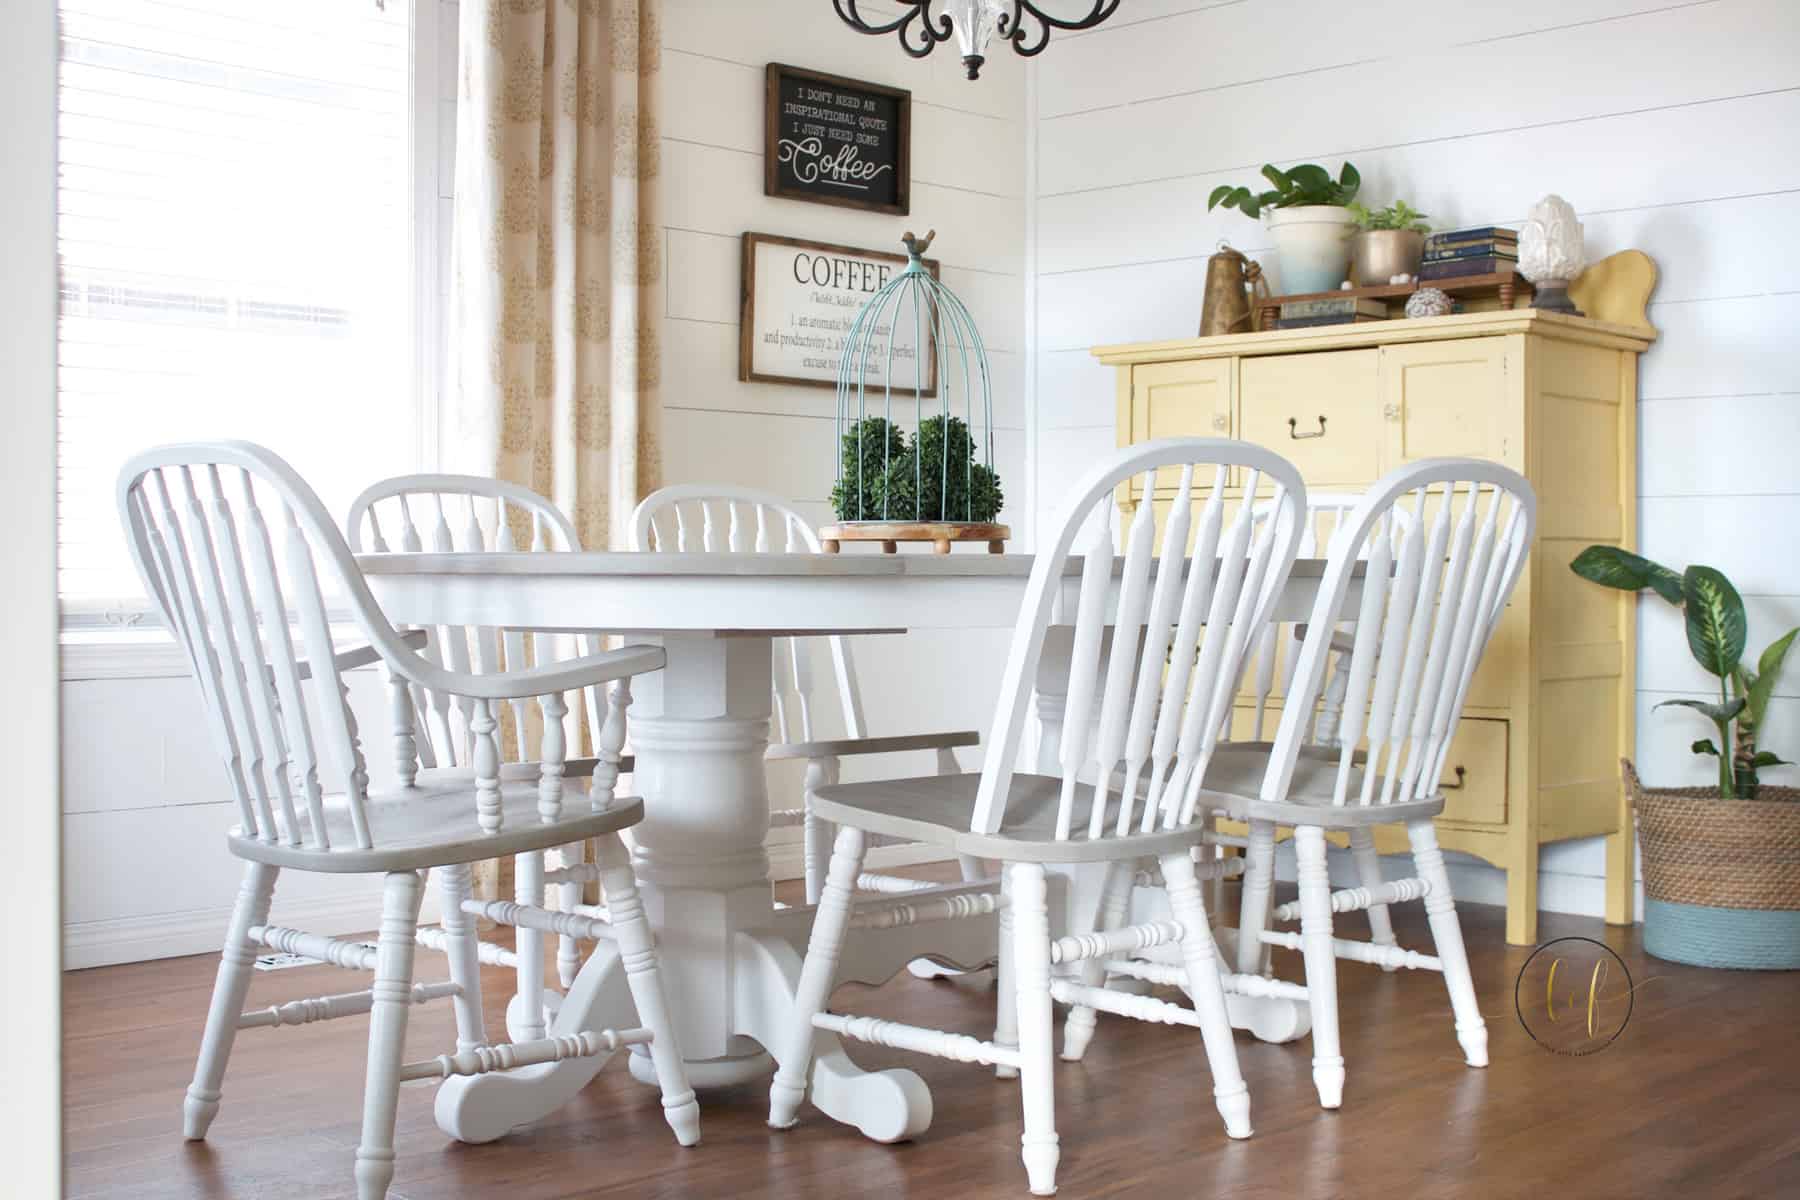 The Driftwood Table #DIY #furniturepaint #paintedfurniture #chalkpaint #white #diningset #diningroom #countrychicpaint #driftwood - blog.countrychicpaint.com